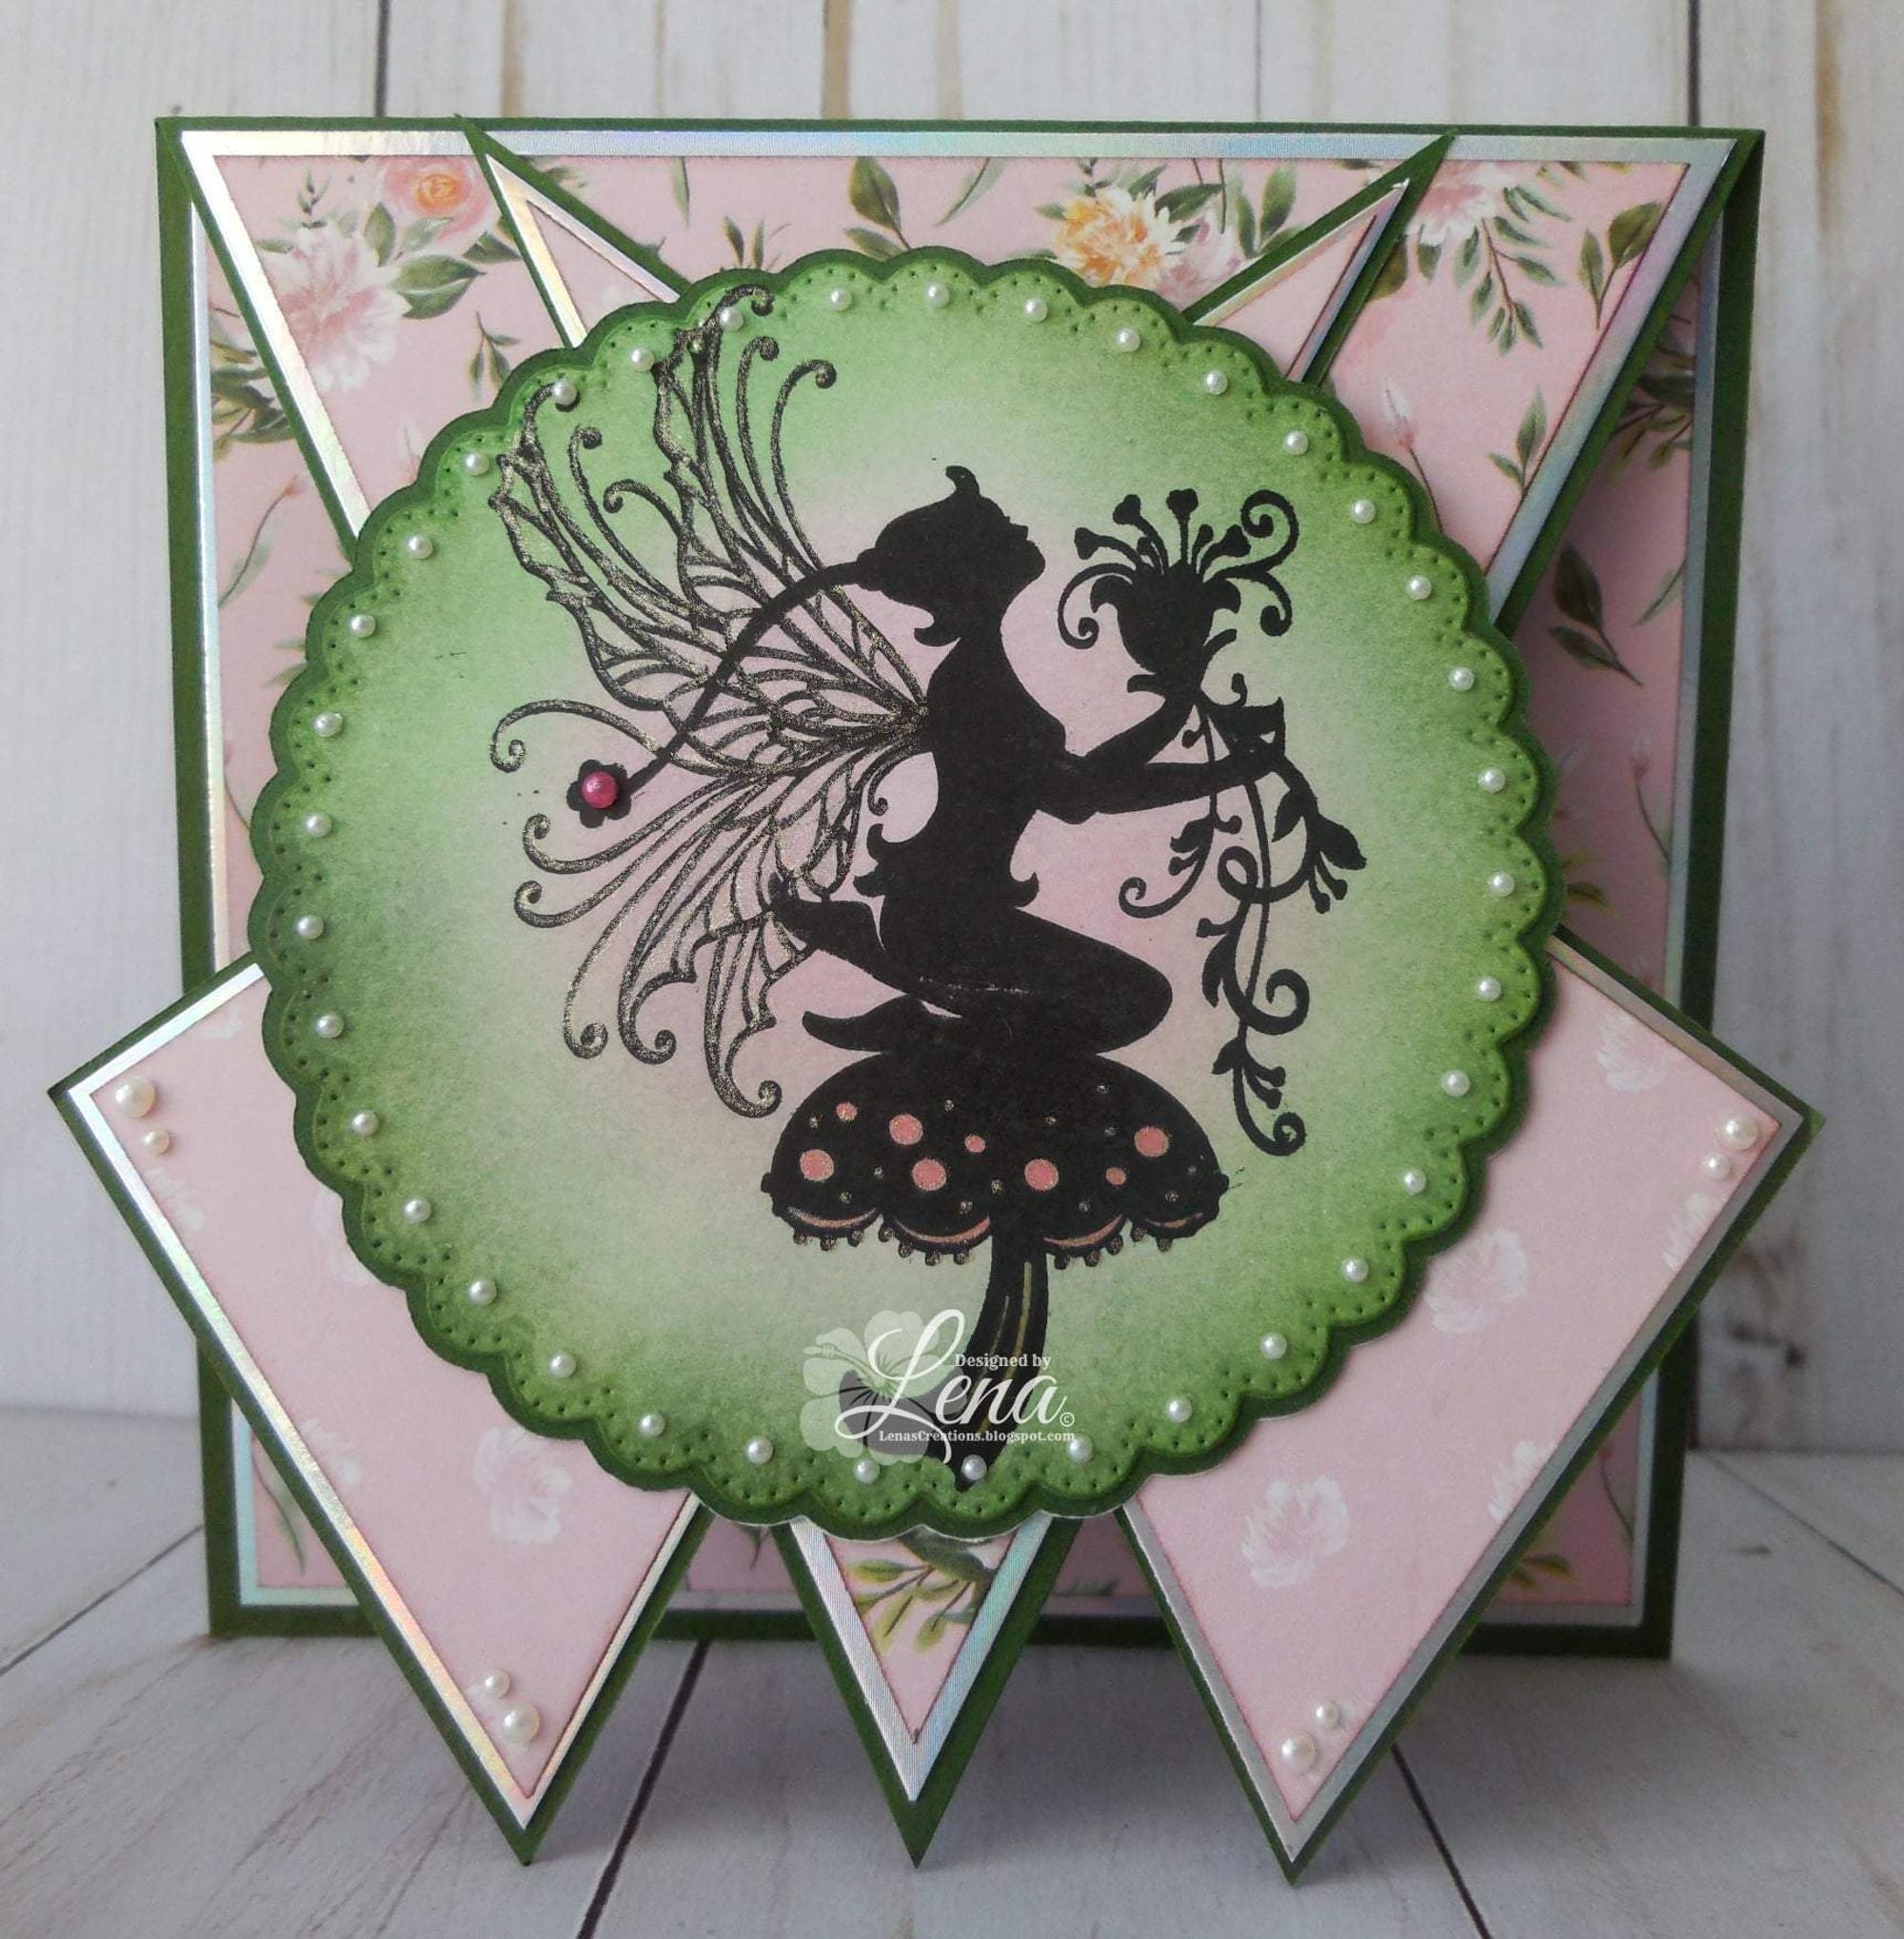 Fairy Hugs Stamps - Ciana